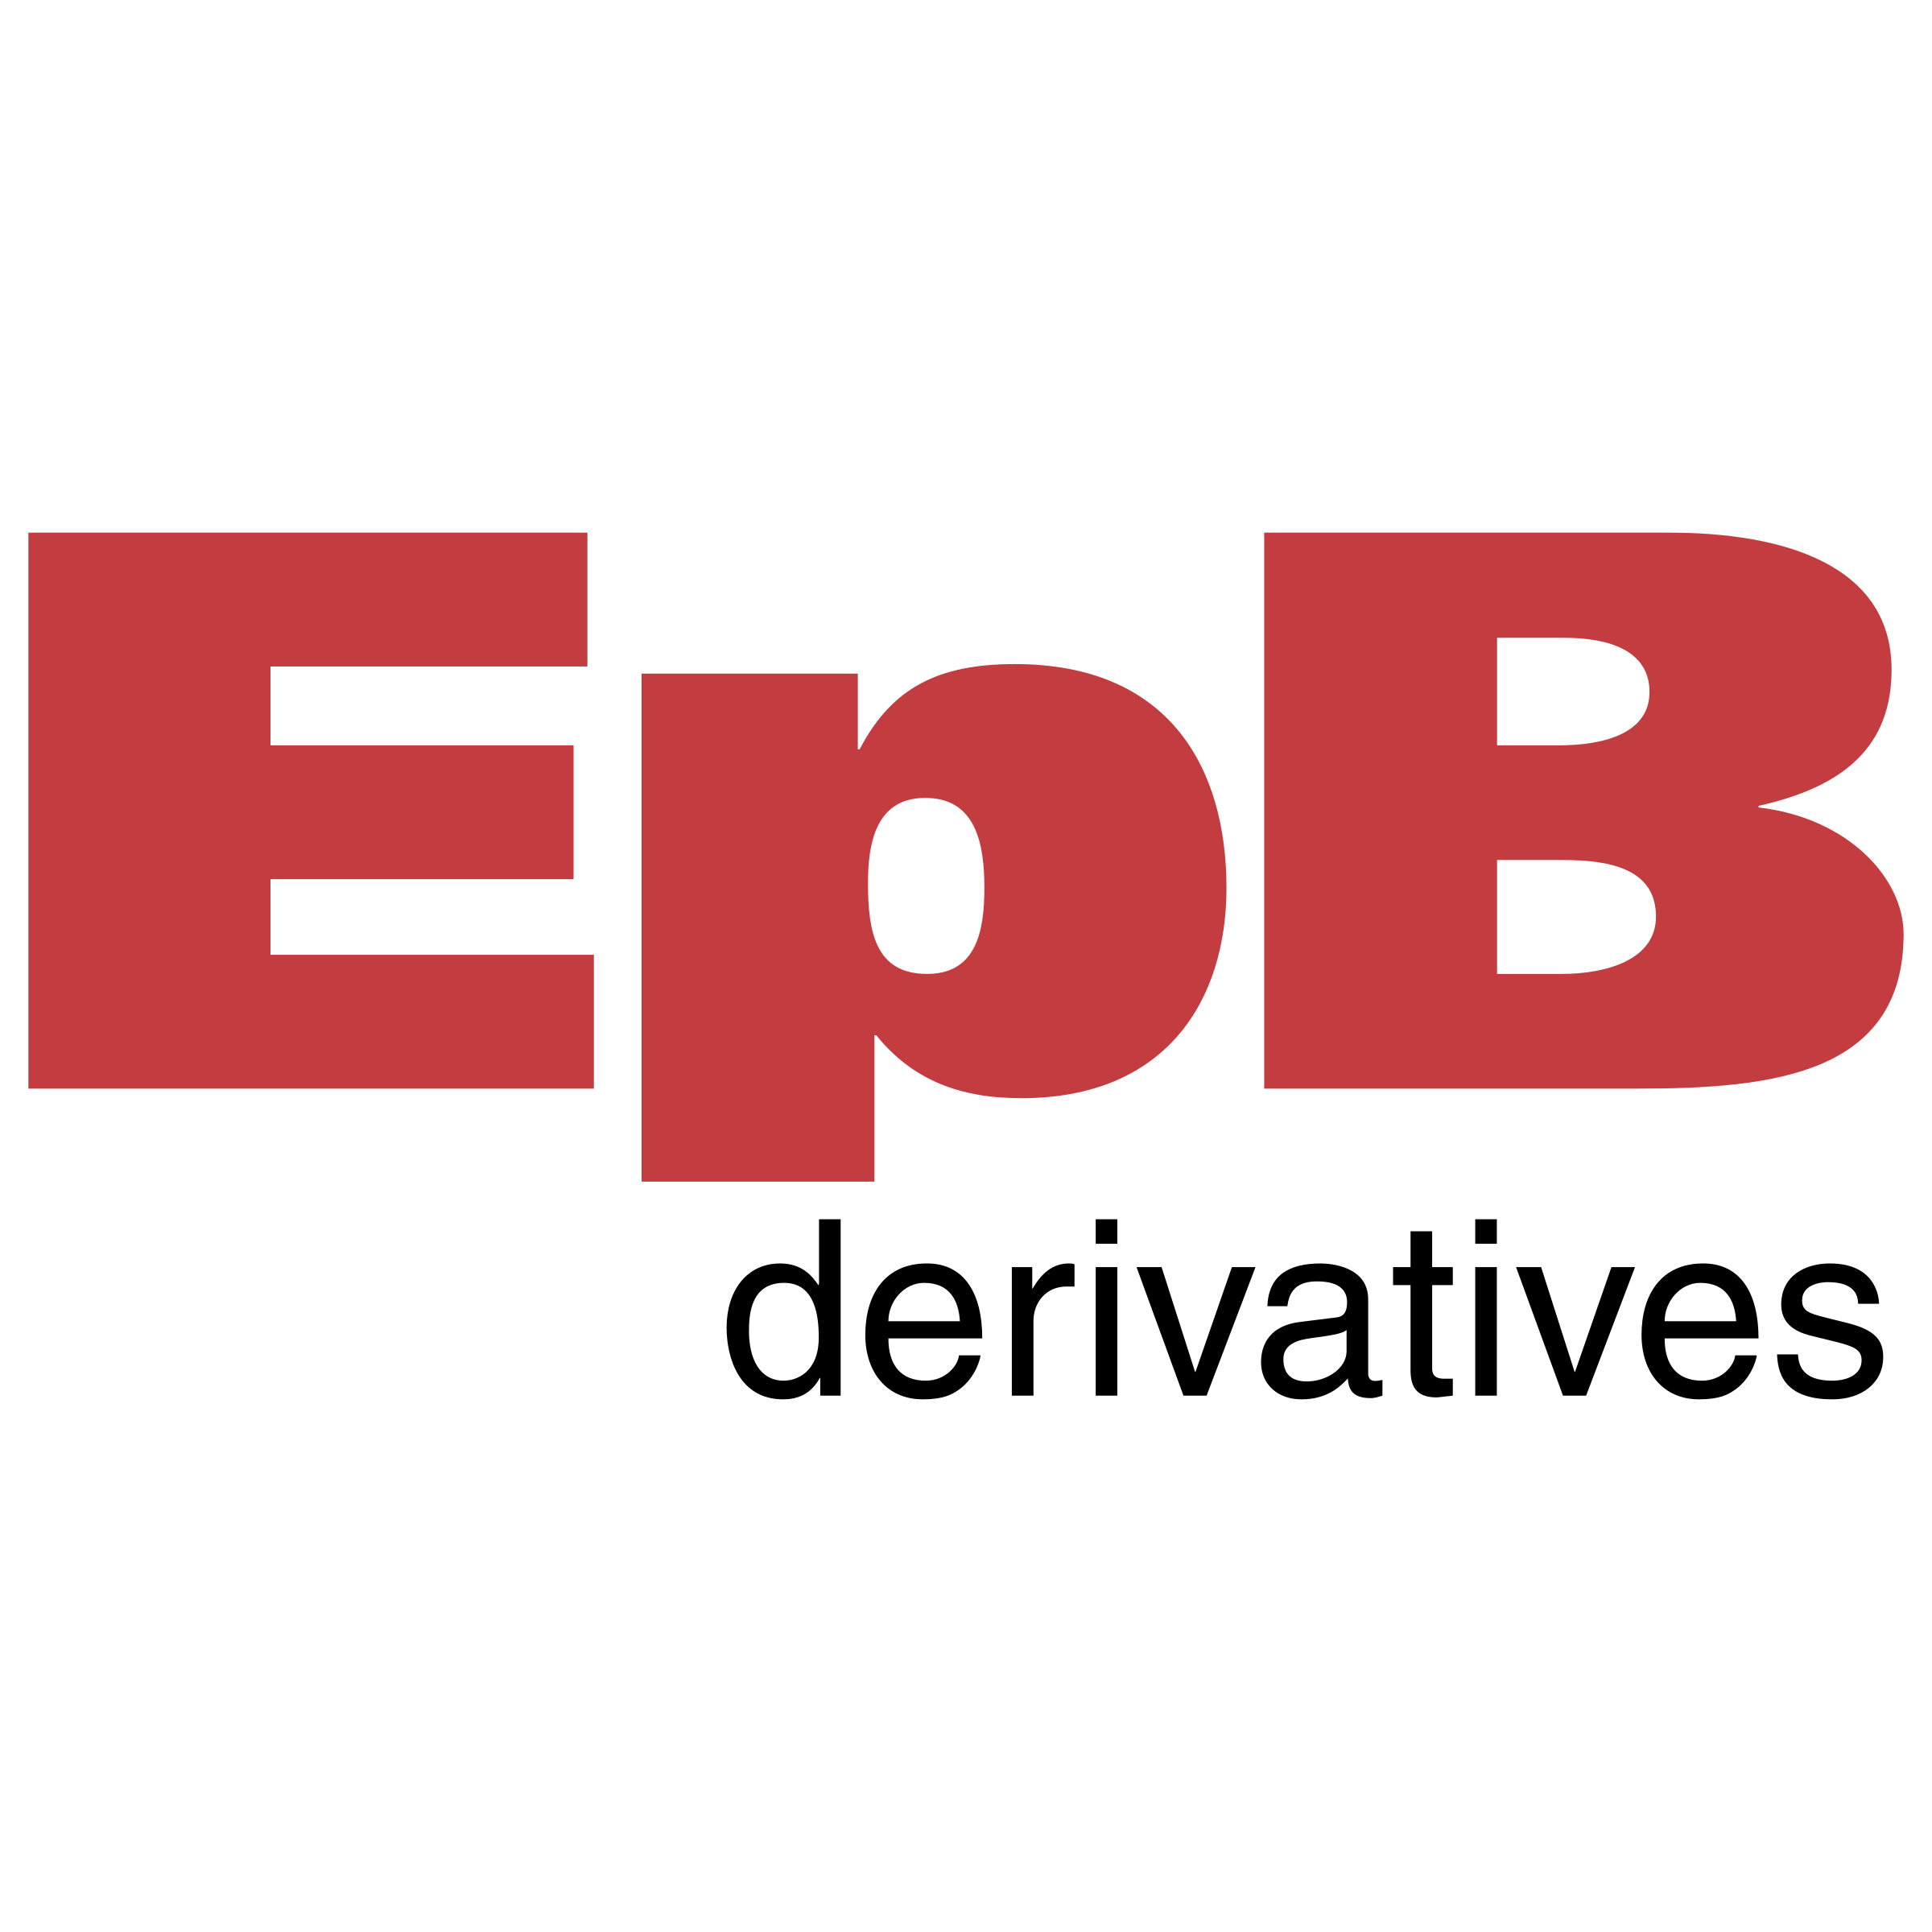 EPB Logo - EpB Logo PNG Transparent & SVG Vector